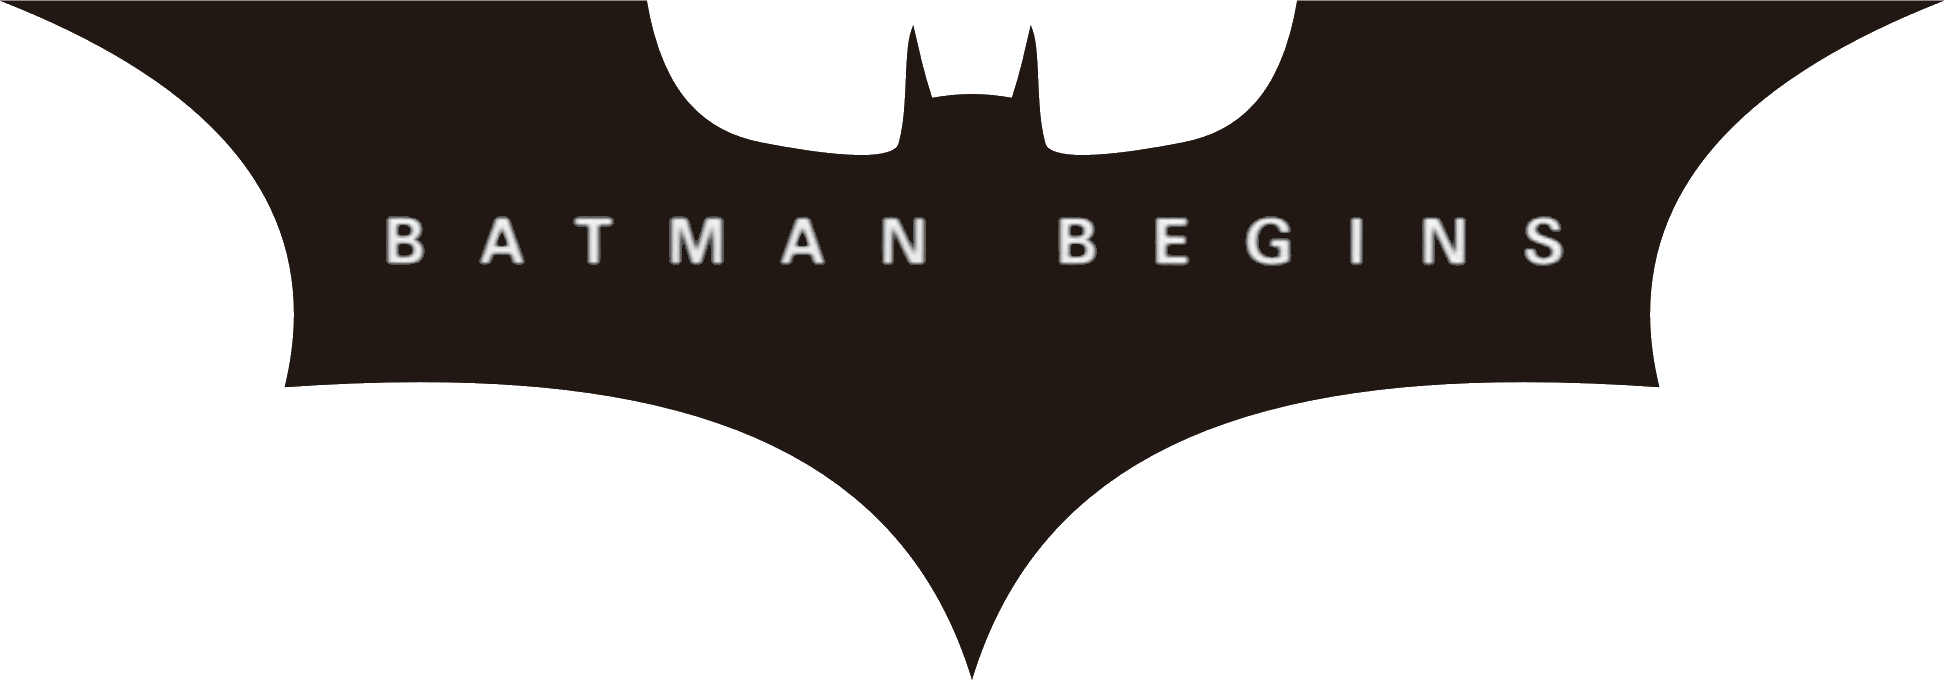 Batman B Logo - Image - Batman Begins Logo.png | Logopedia | FANDOM powered by Wikia